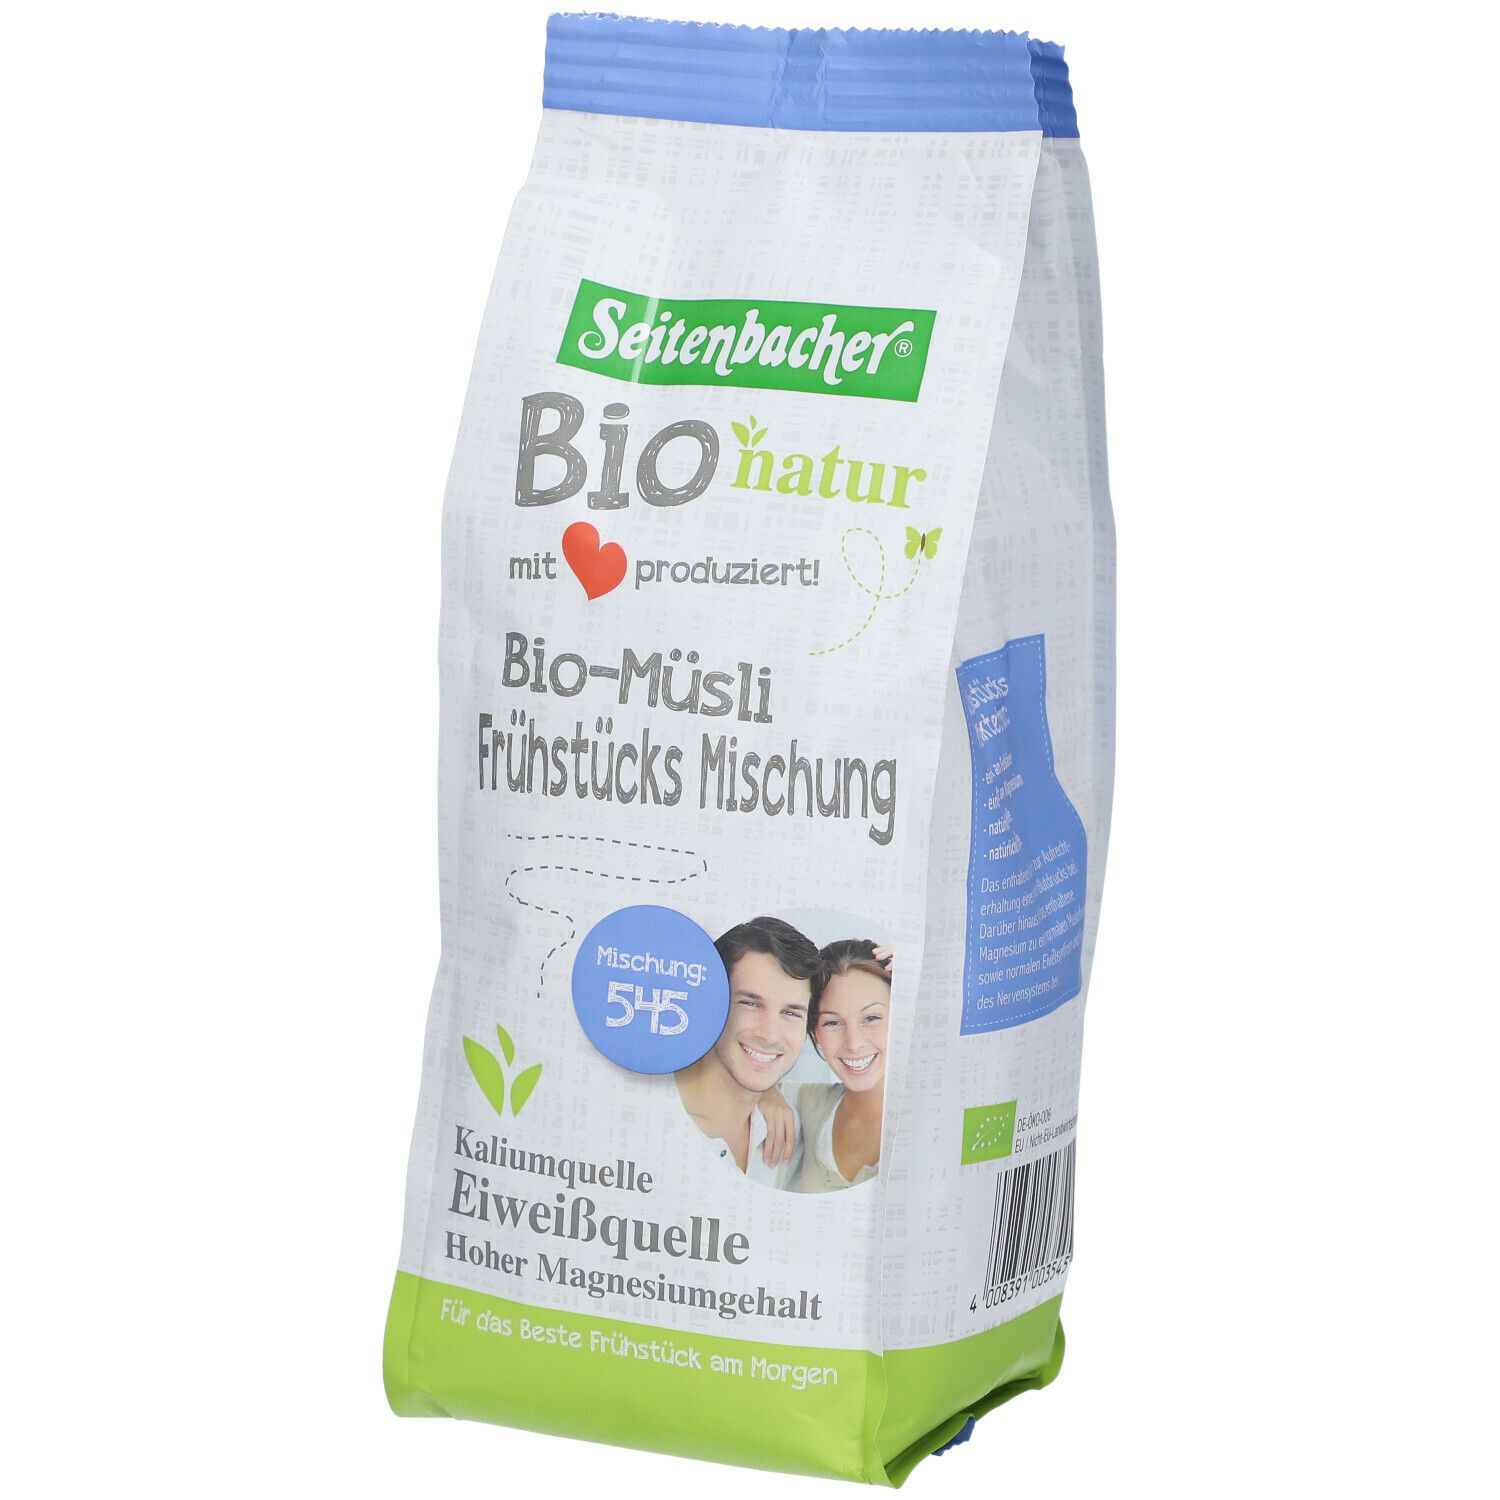 Seitenbacher® Bio natur Bio Müsli Frühstücksmischung